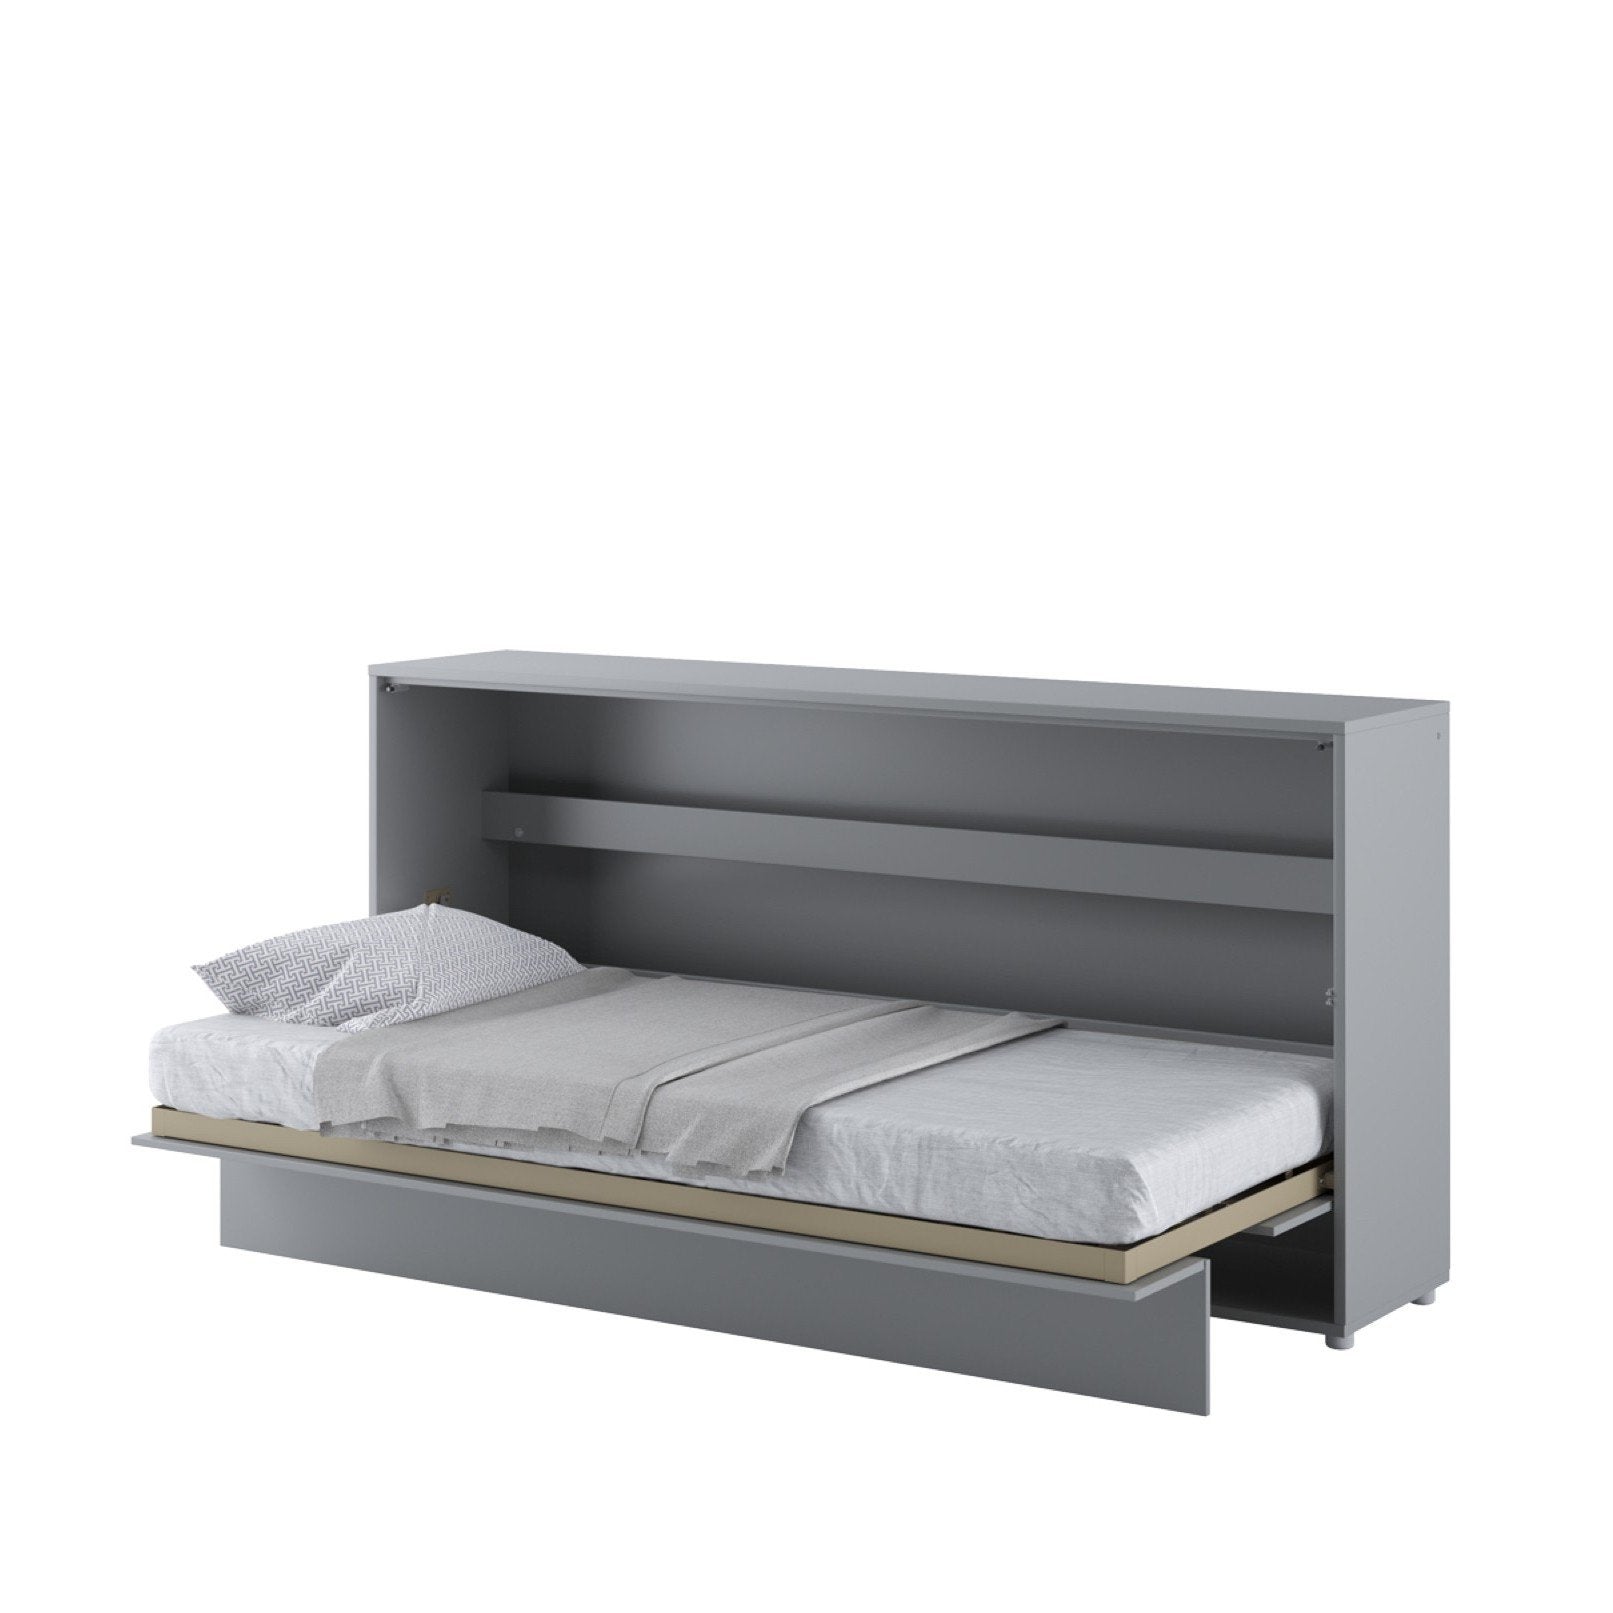 View BC06 Horizontal Wall Bed Concept 90cm Murphy Bed Grey Matt 90 x 200cm information